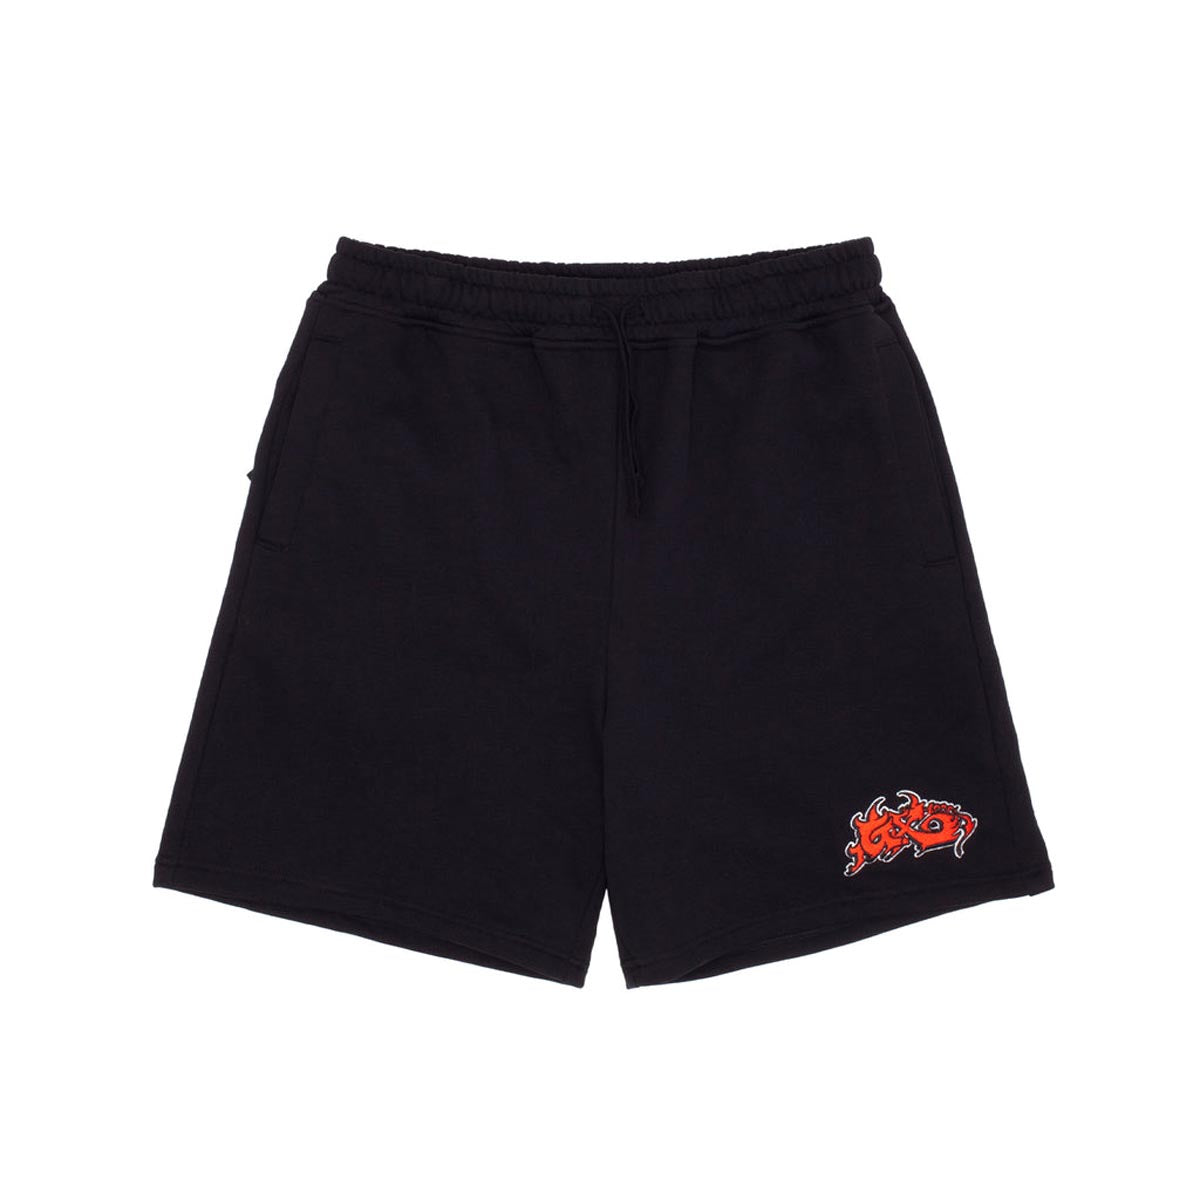 GX1000 Sweat Shorts - Black image 1